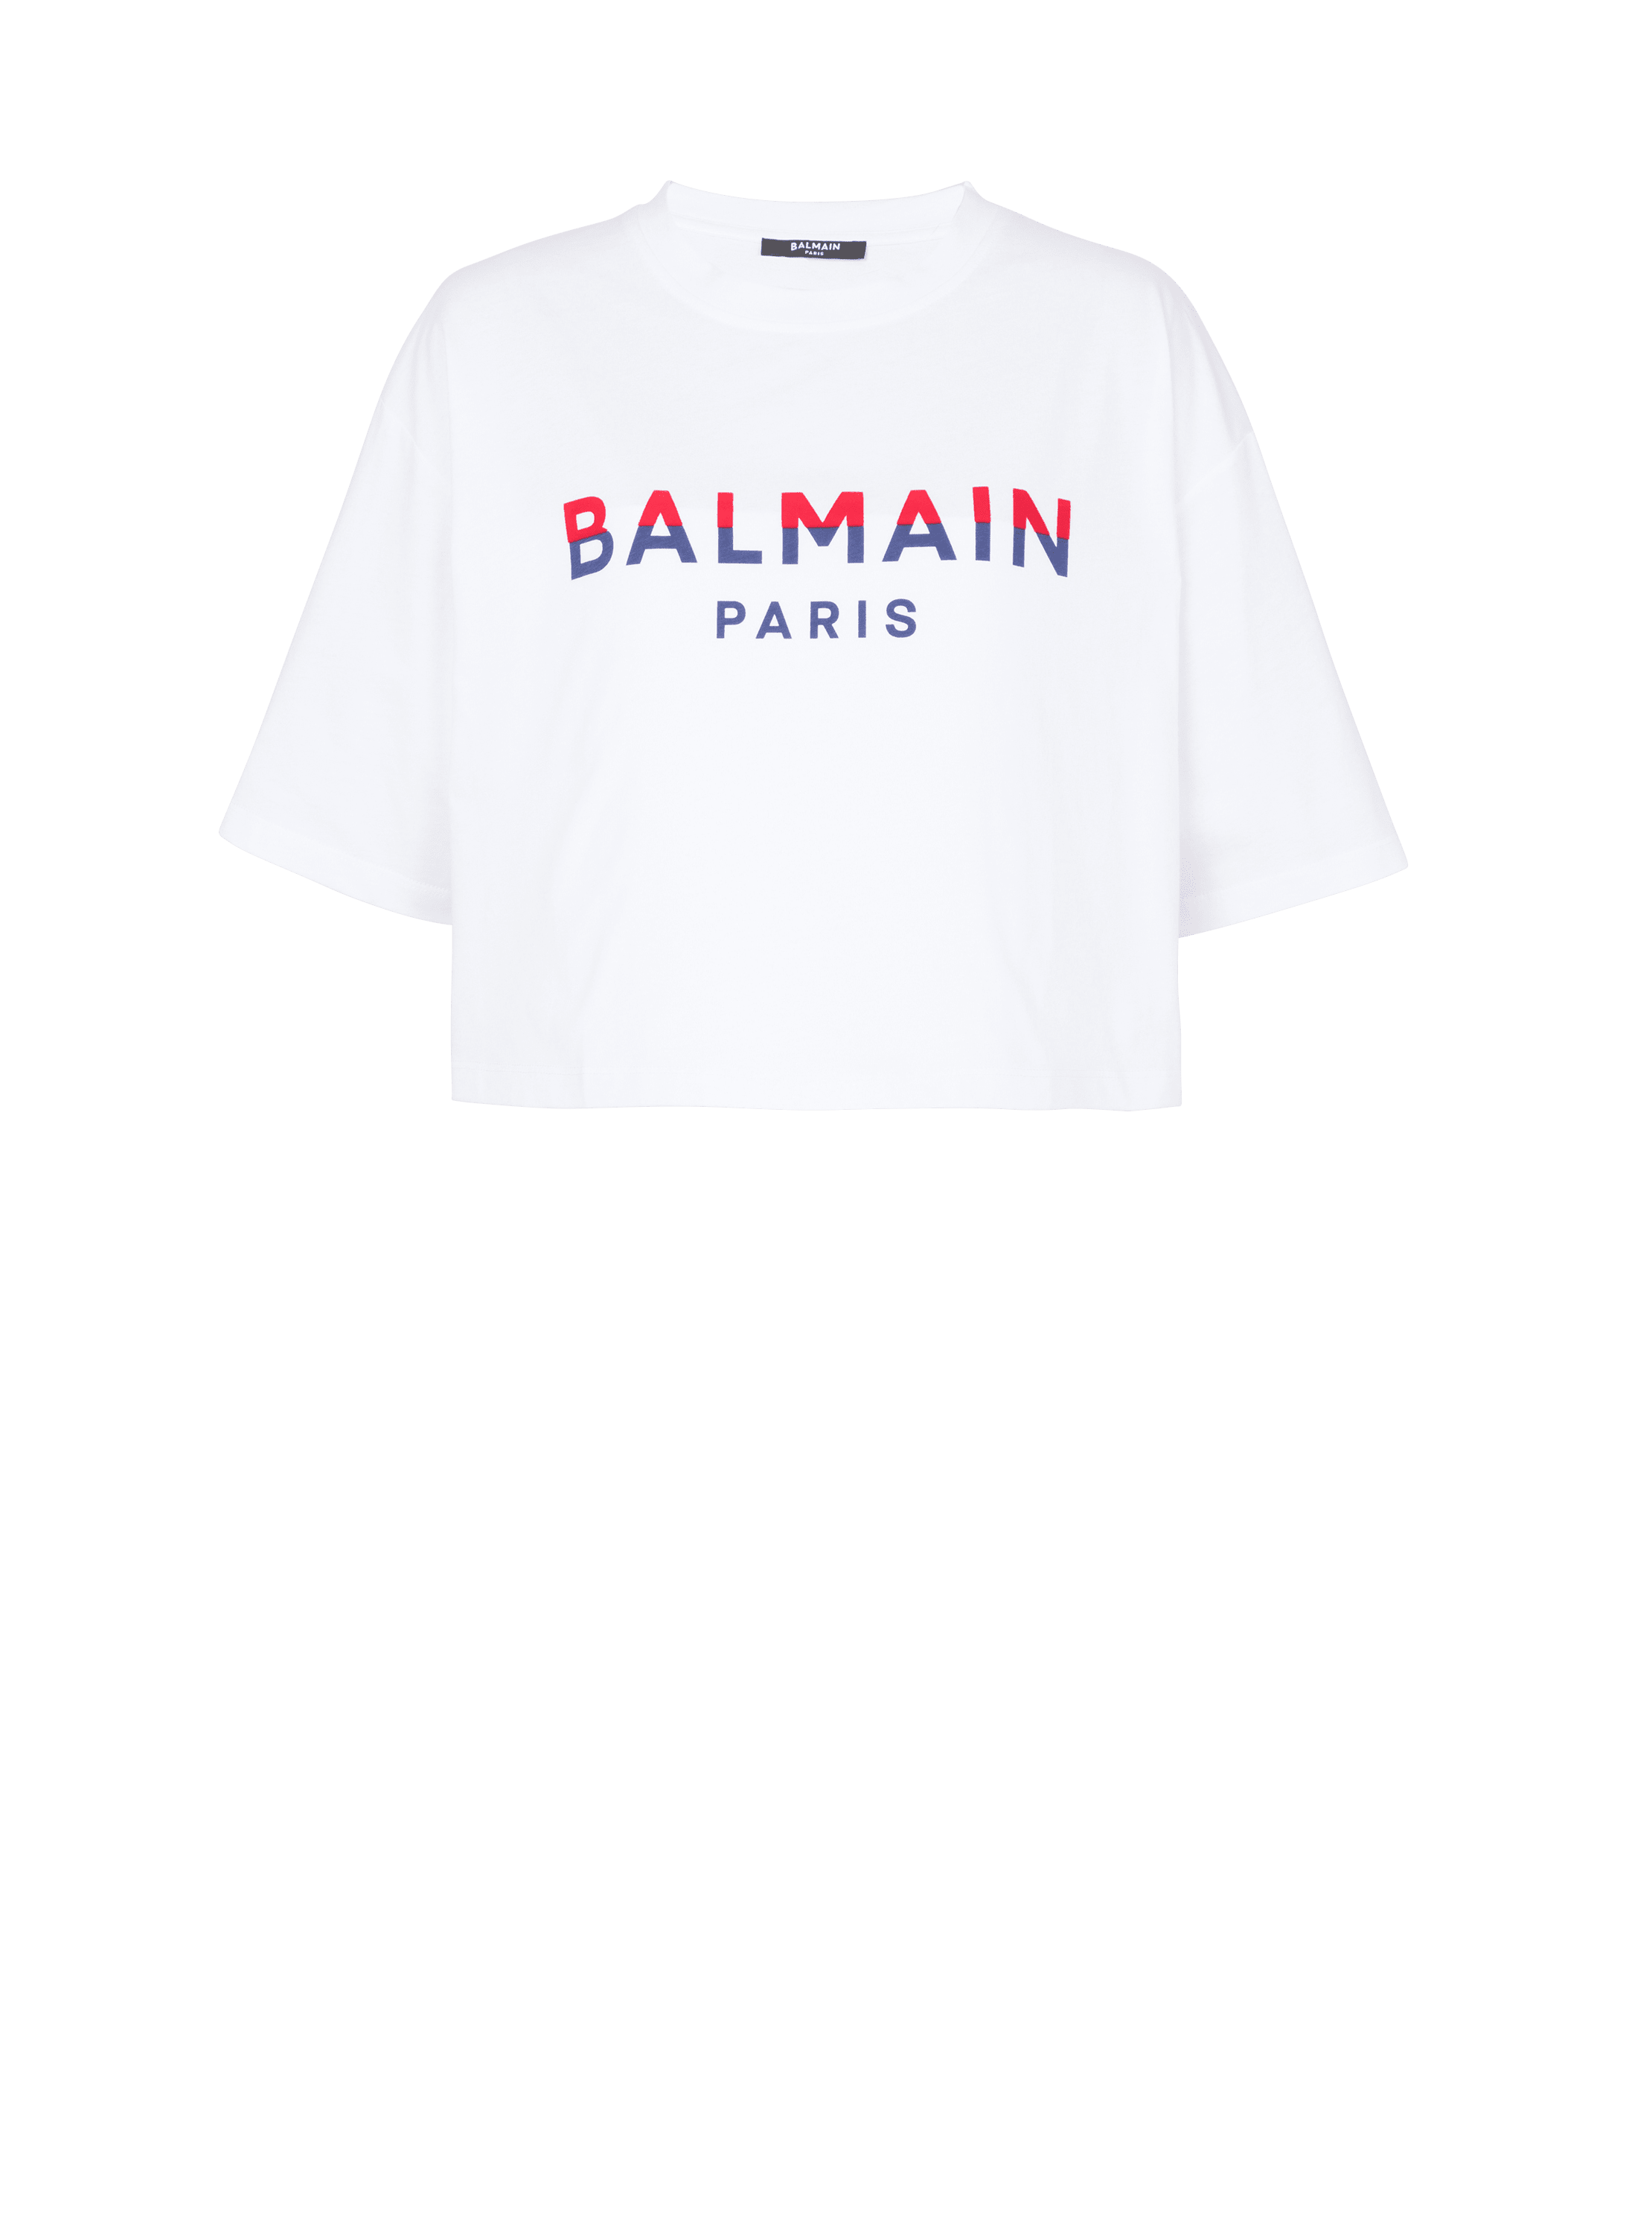 Flocked Balmain Paris T-Shirt - | BALMAIN